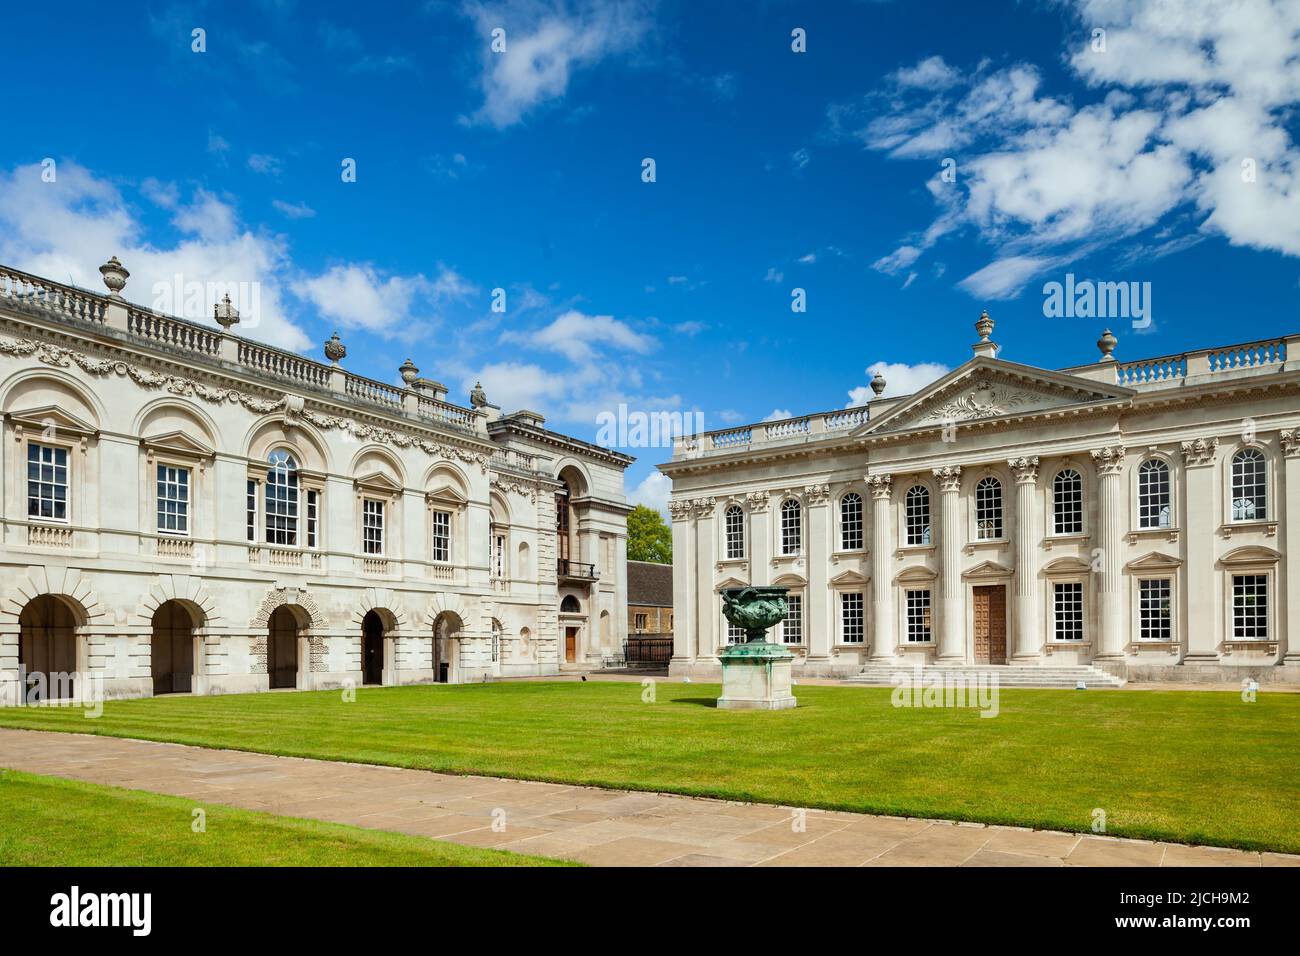 Senate House in Cambridge city centre, England. Stock Photo